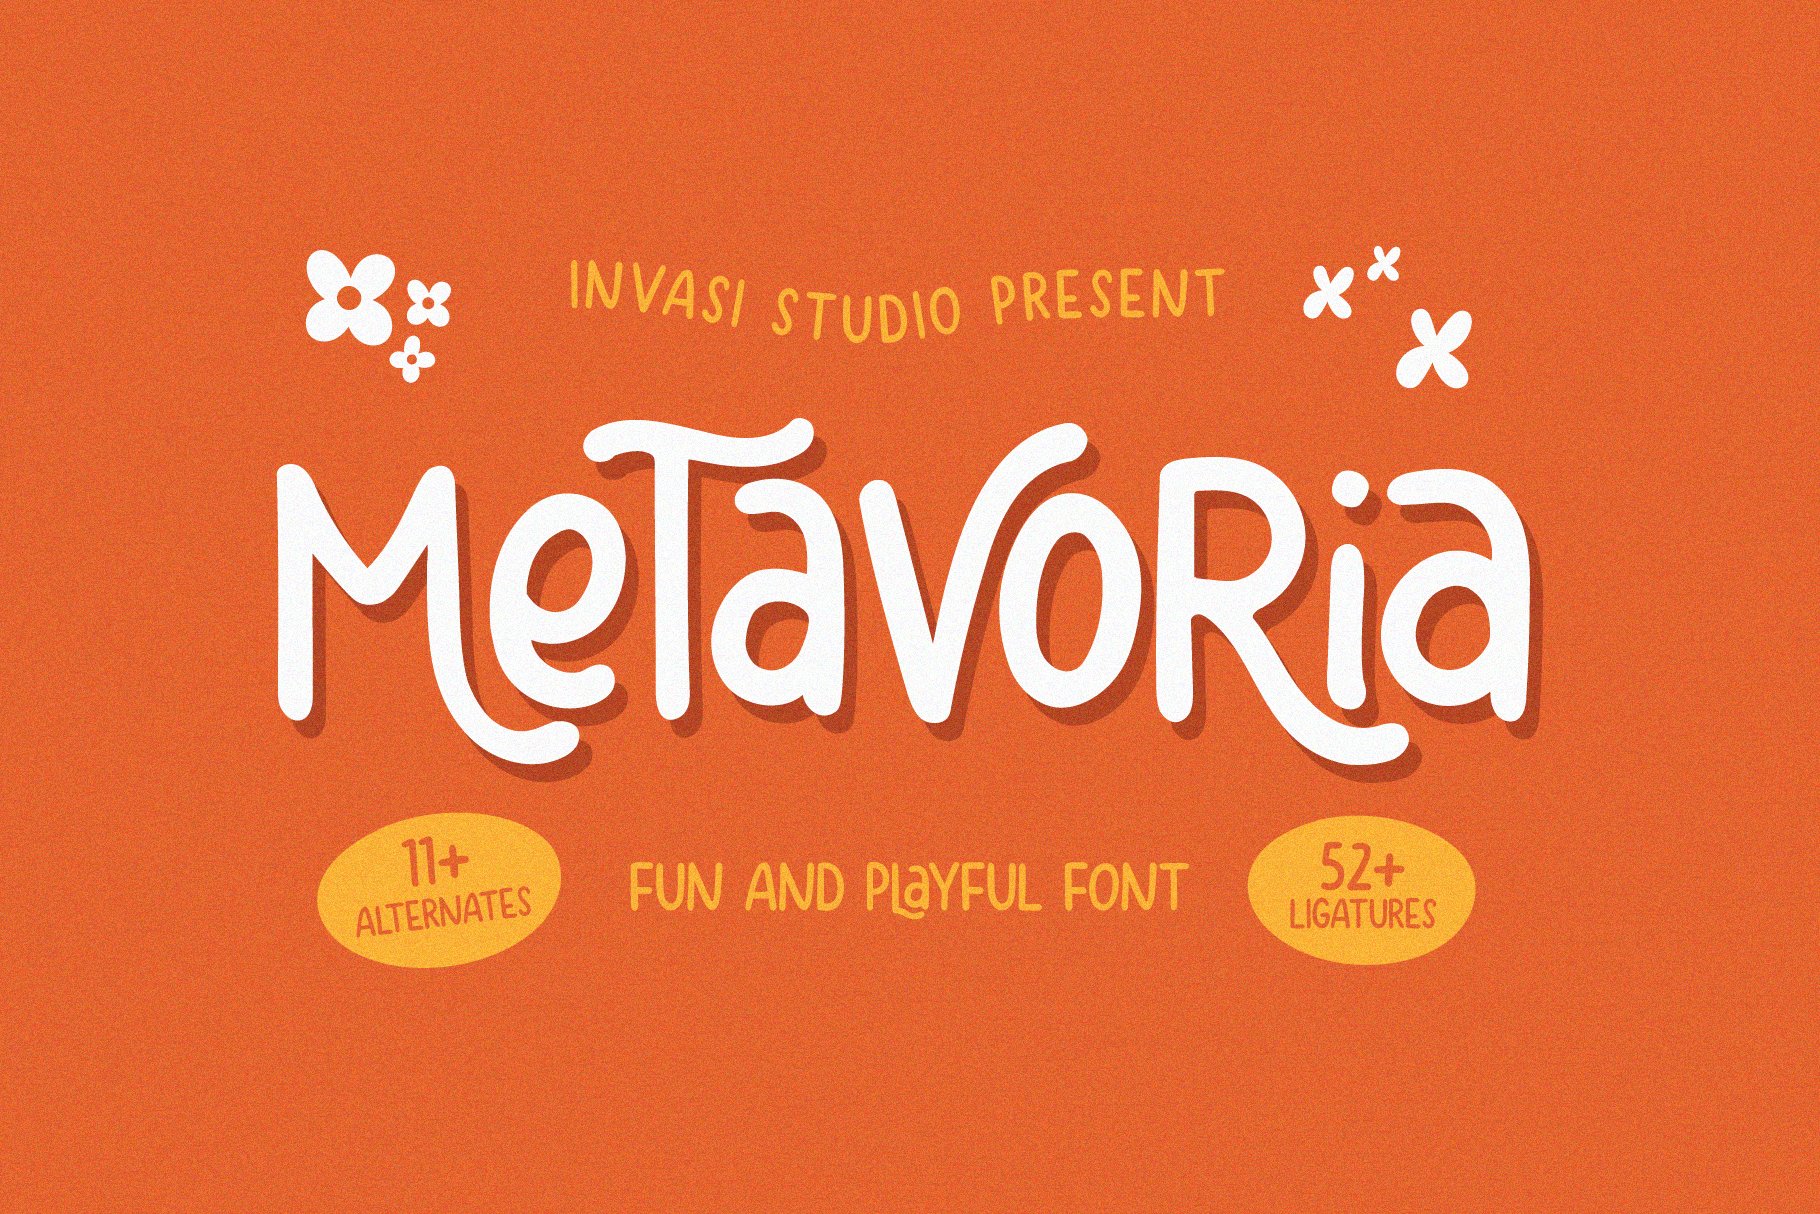 Metavoria - Playful Font cover image.